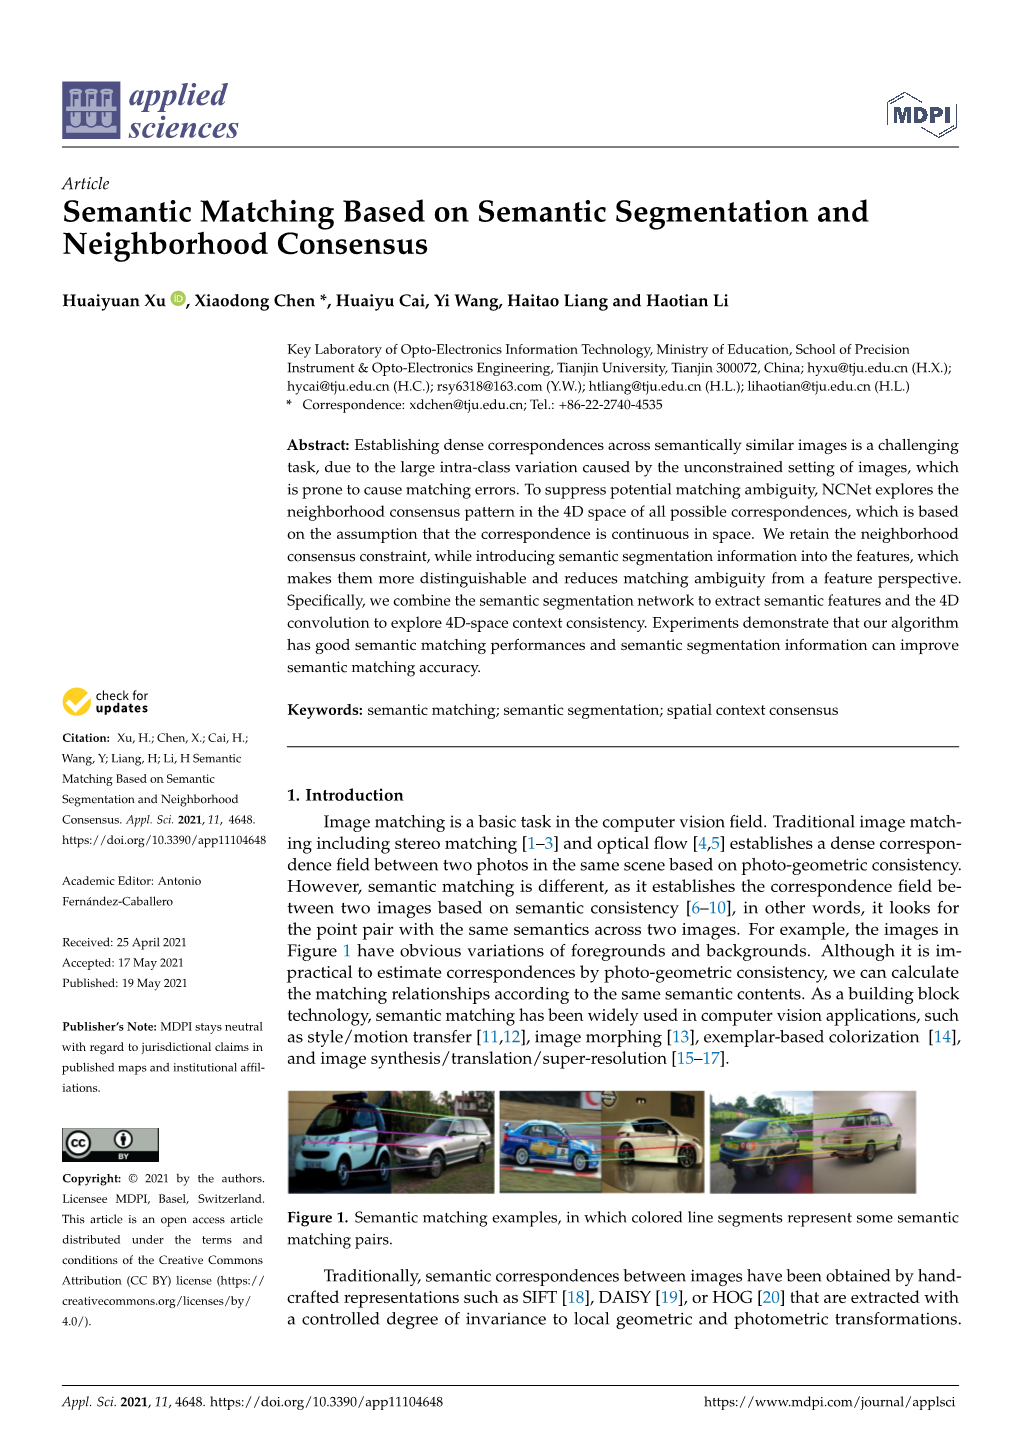 Semantic Matching Based on Semantic Segmentation and Neighborhood Consensus